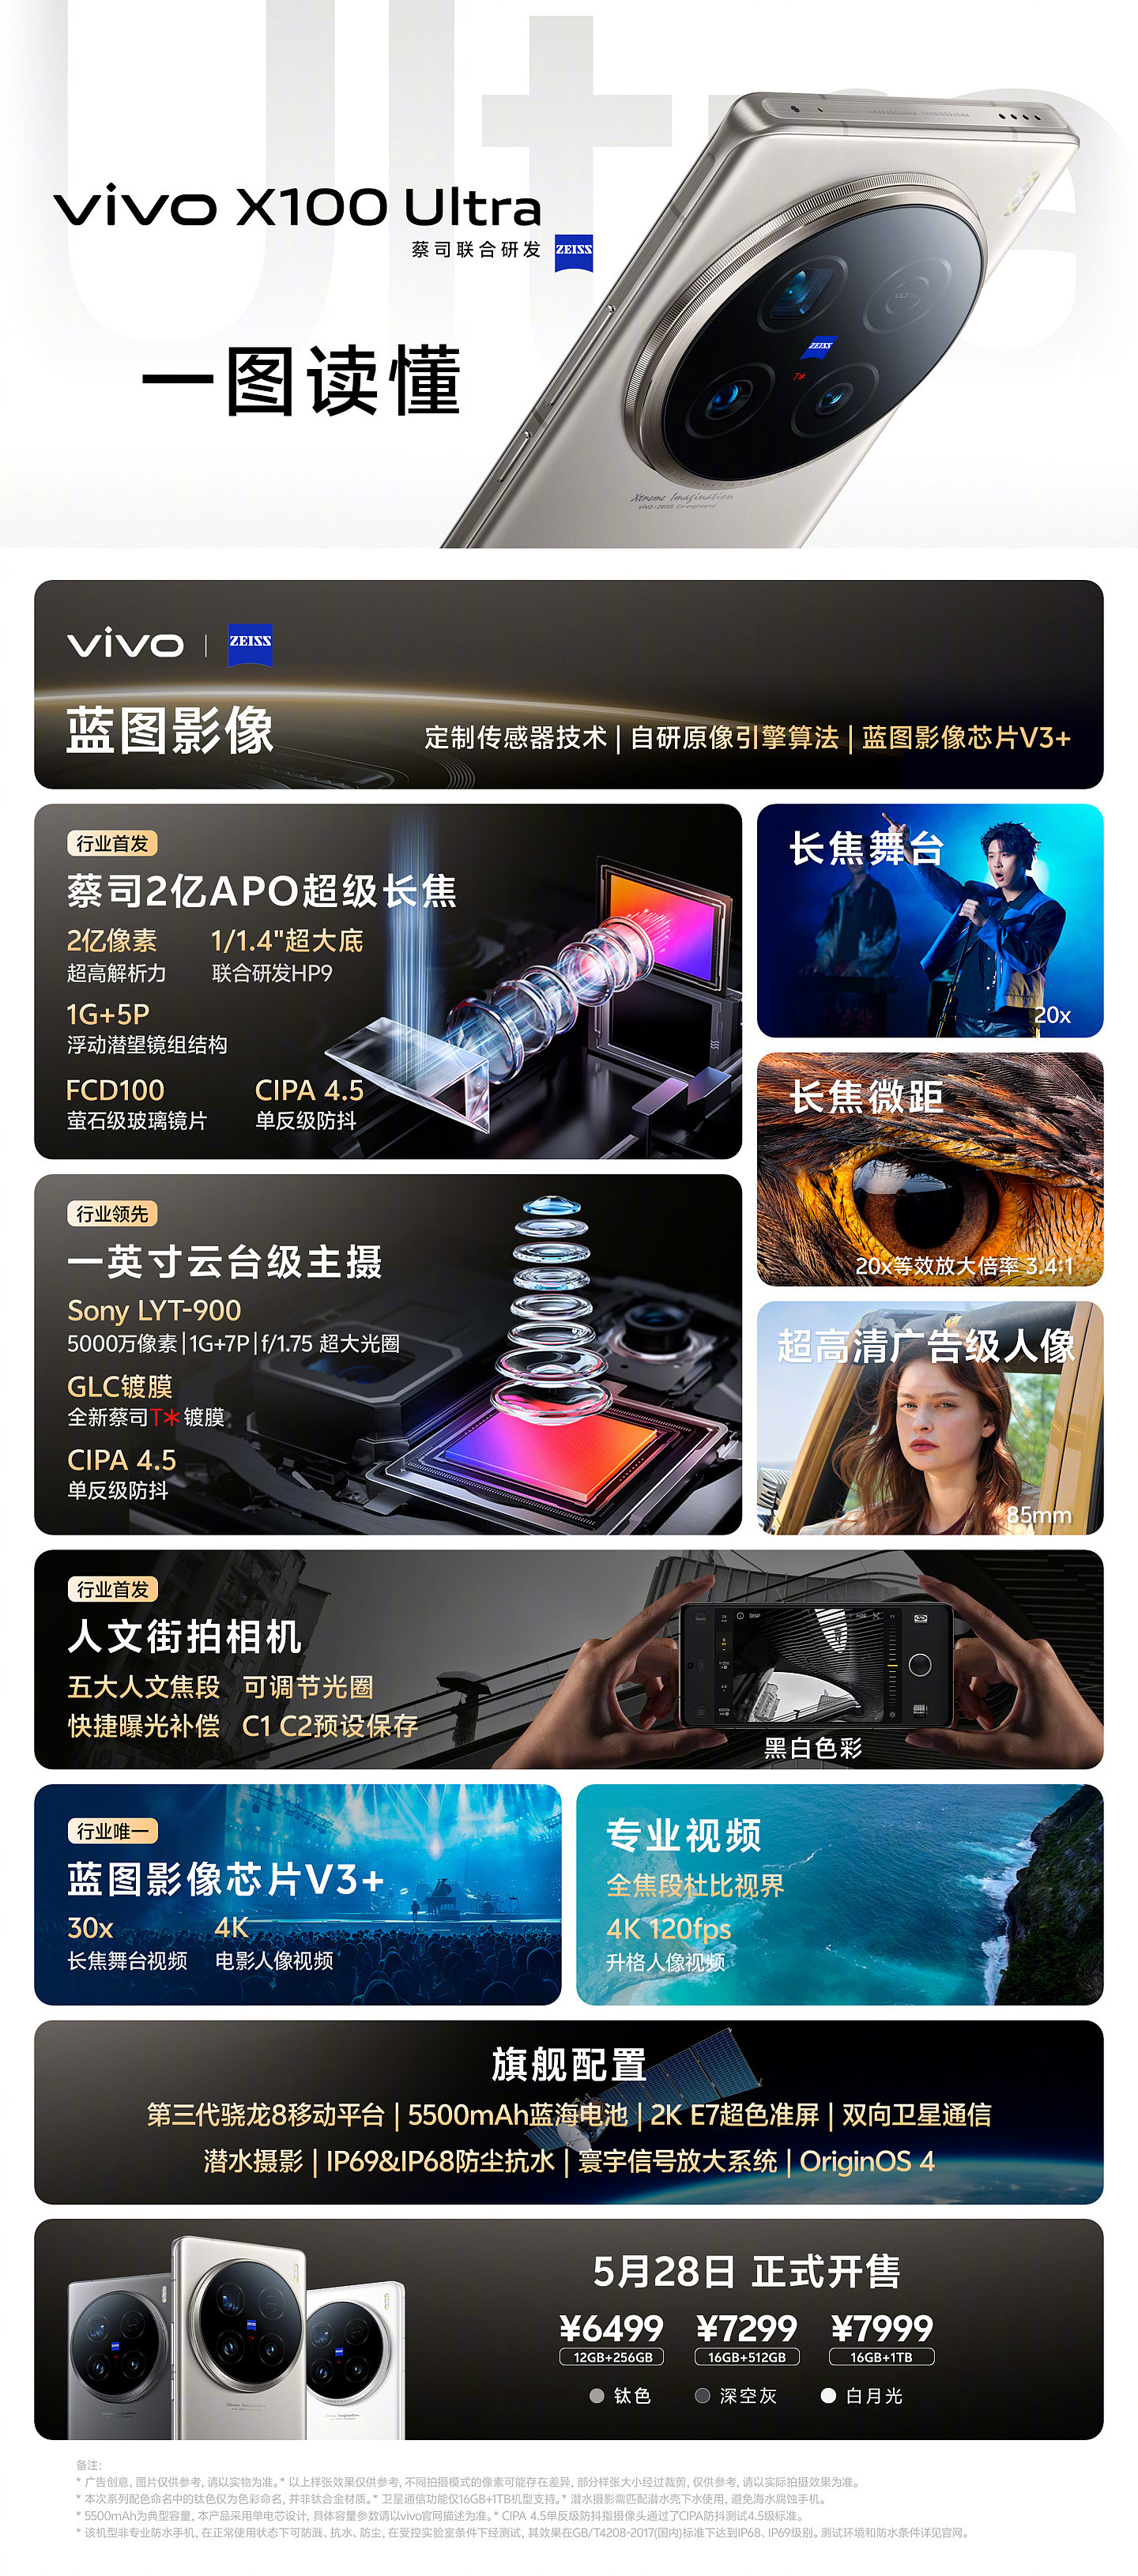 vivo X100 Ultra 发布：官方称“买相机送手机”，售价 6499 元起 - 21